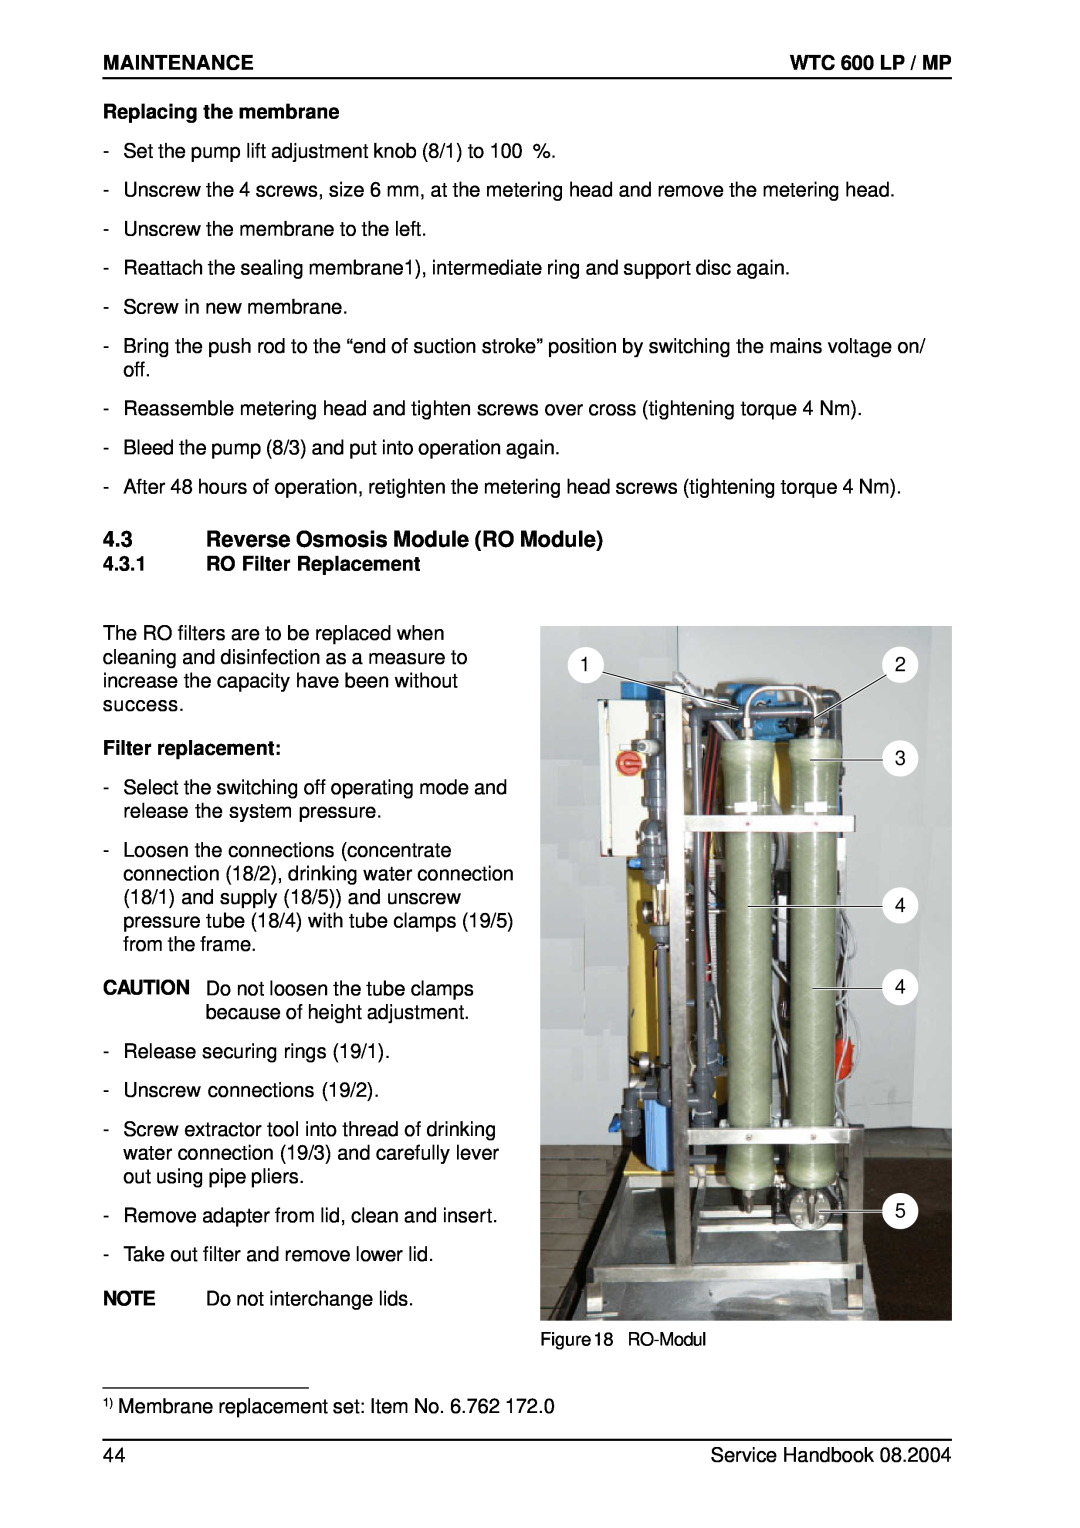 Karcher 600 CD manual 4.3Reverse Osmosis Module RO Module, Maintenance, Replacing the membrane, 4.3.1RO Filter Replacement 